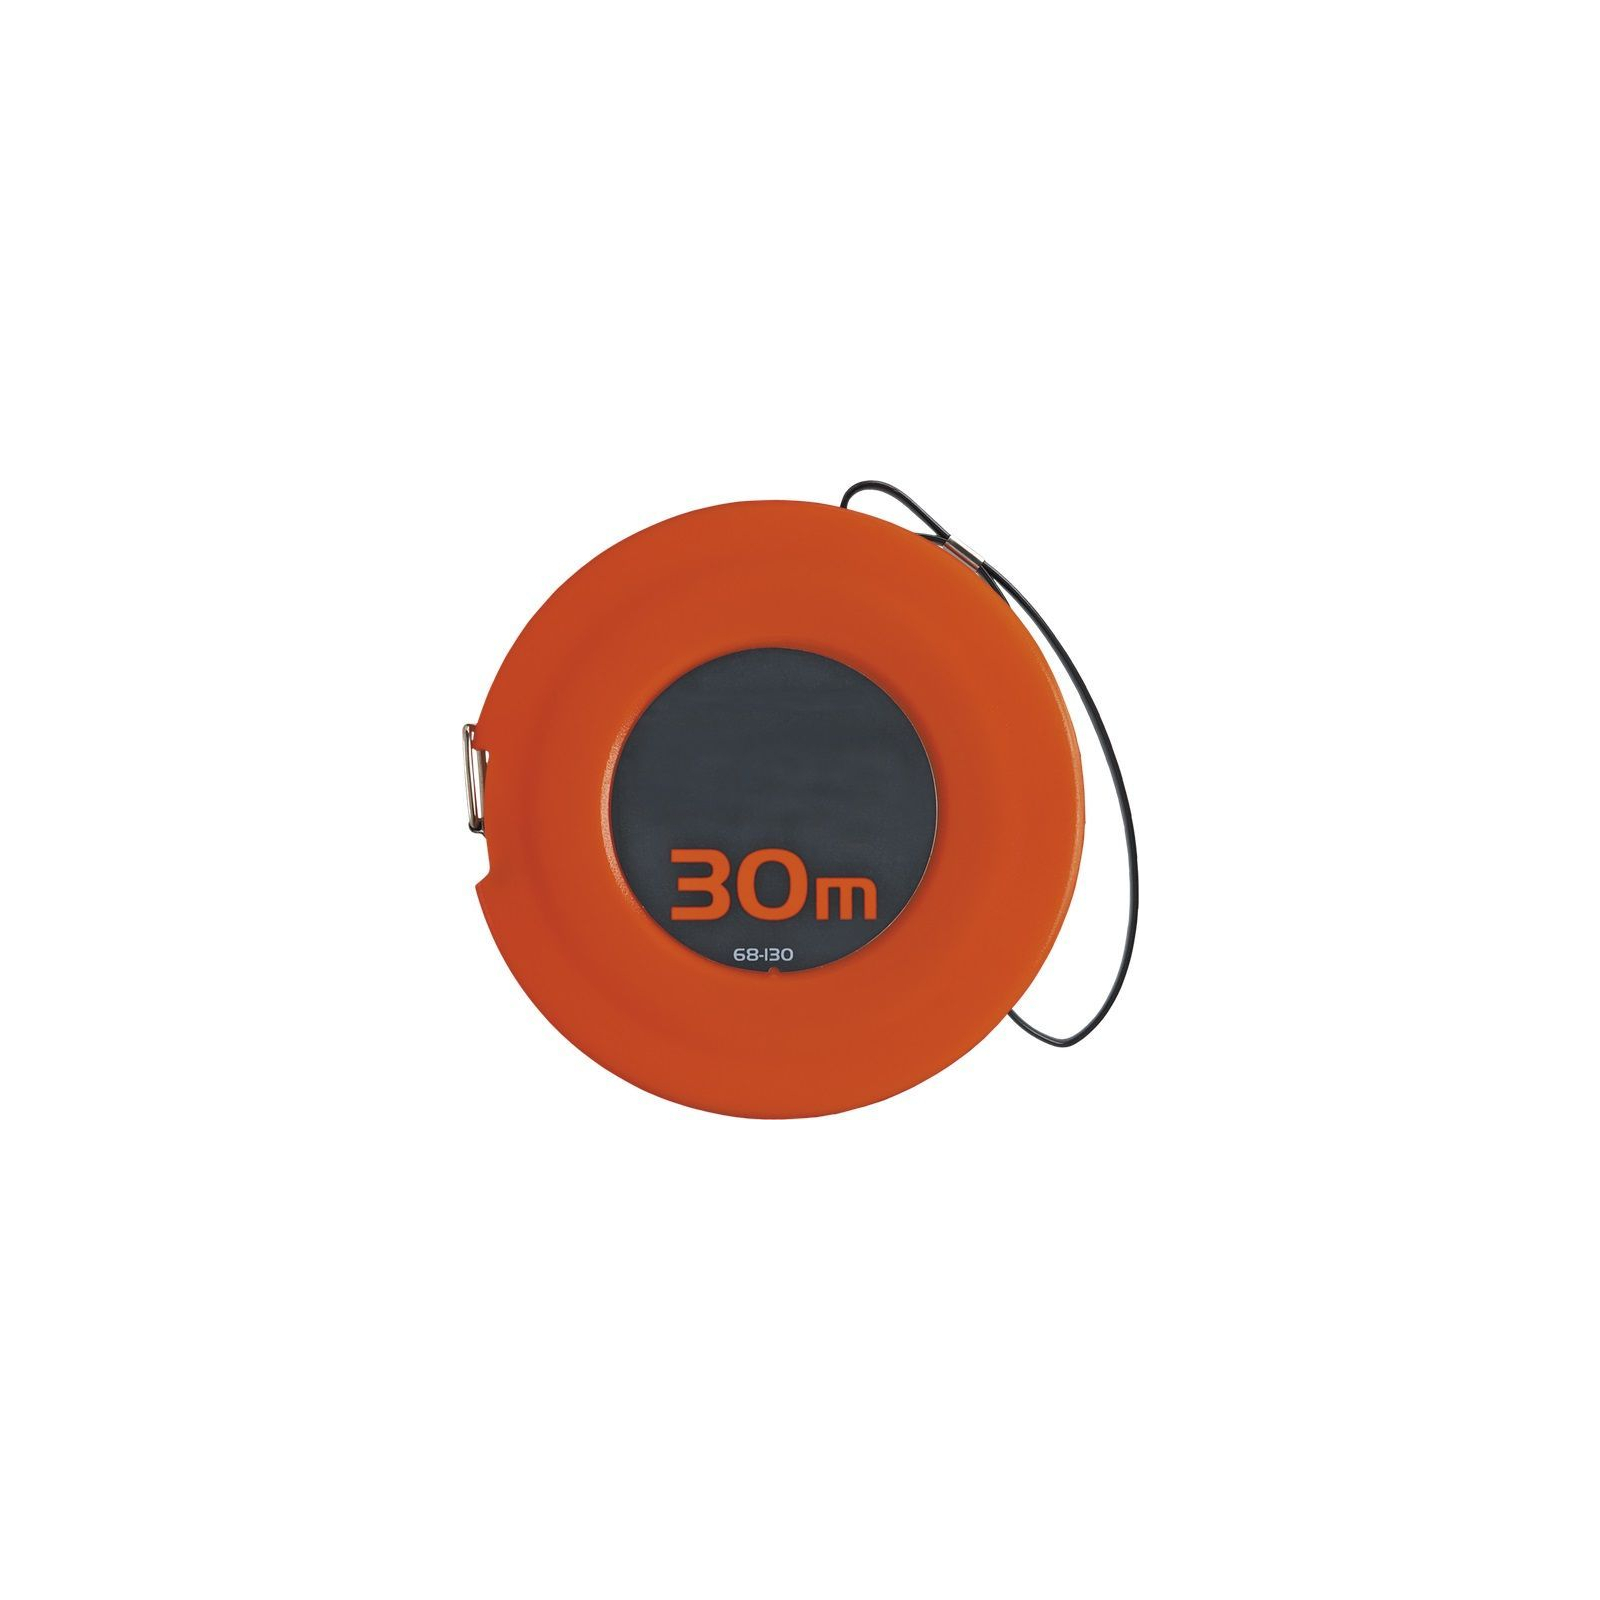 Рулетка Neo Tools стрічка вимірювальна сталева, 30 м (68-130)